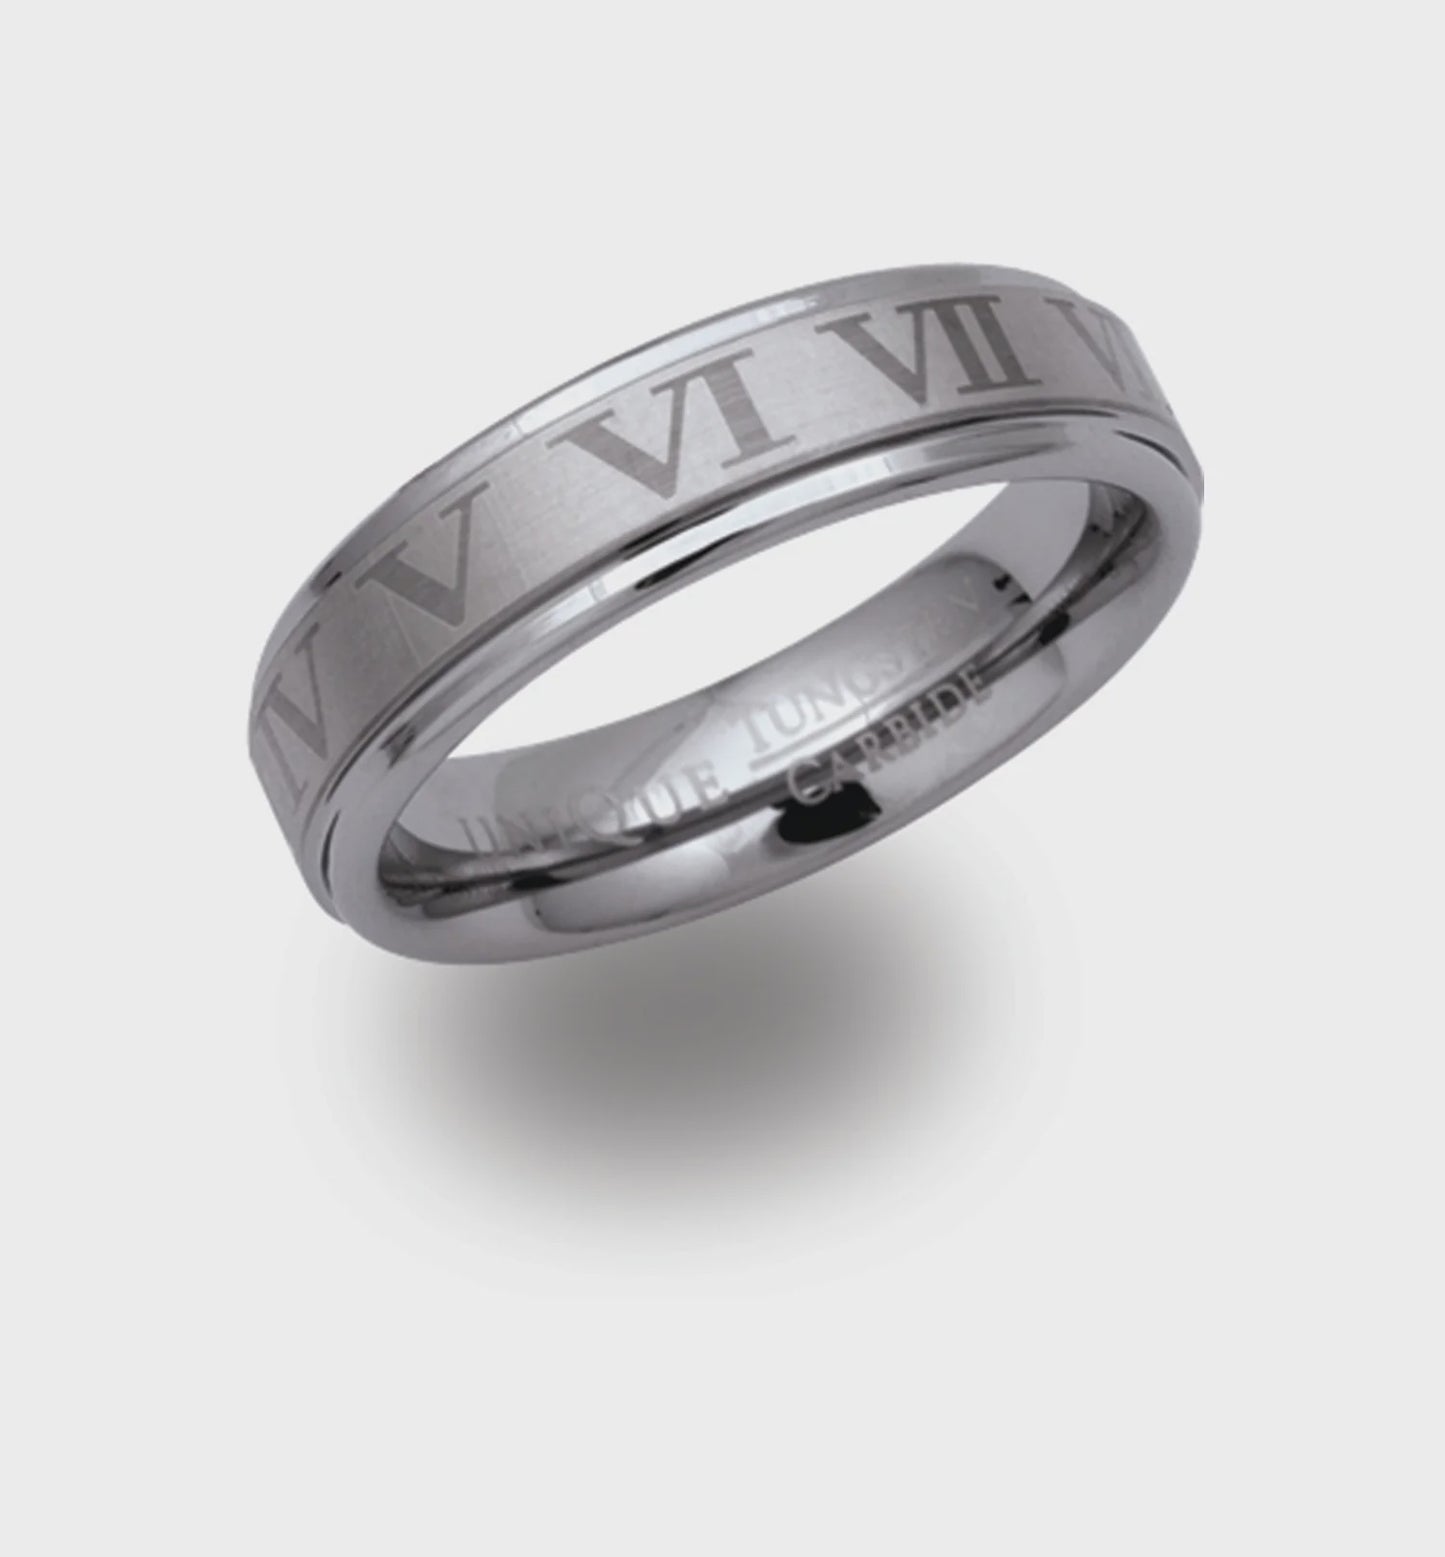 Roman Numeral Tungsten ring